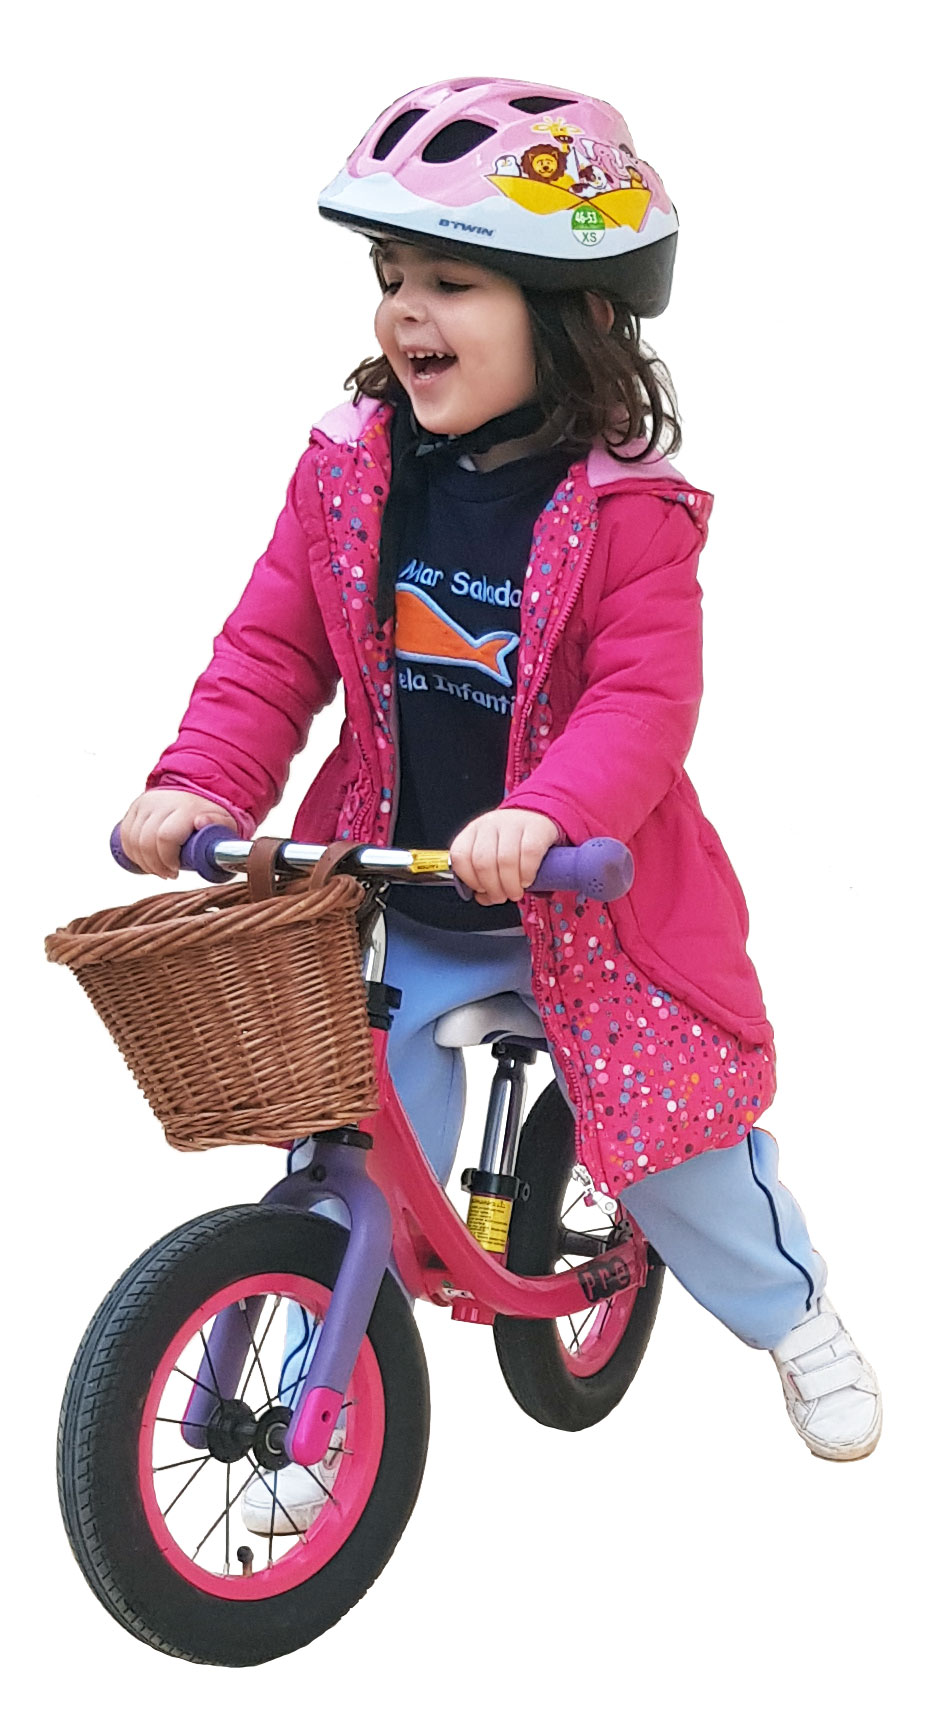 bike with basket kids